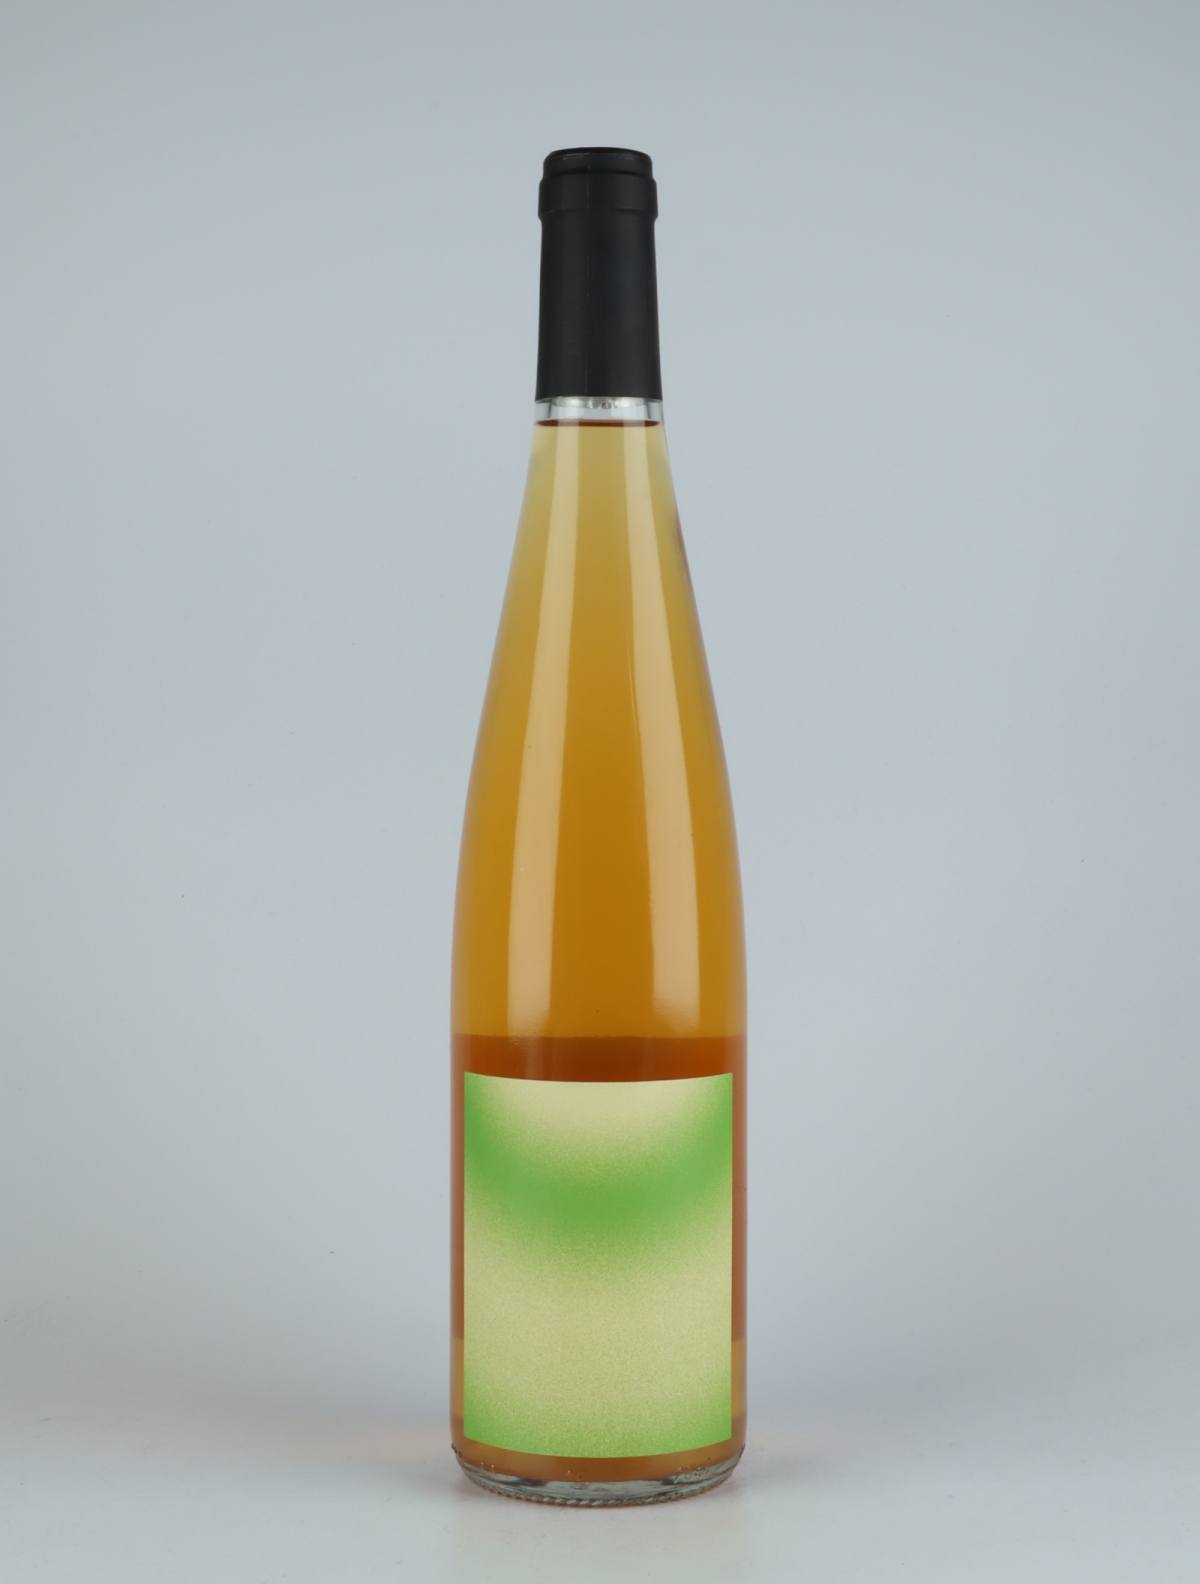 A bottle 2020 L’Alliance Orange wine from Domaine Goepp, Alsace in France